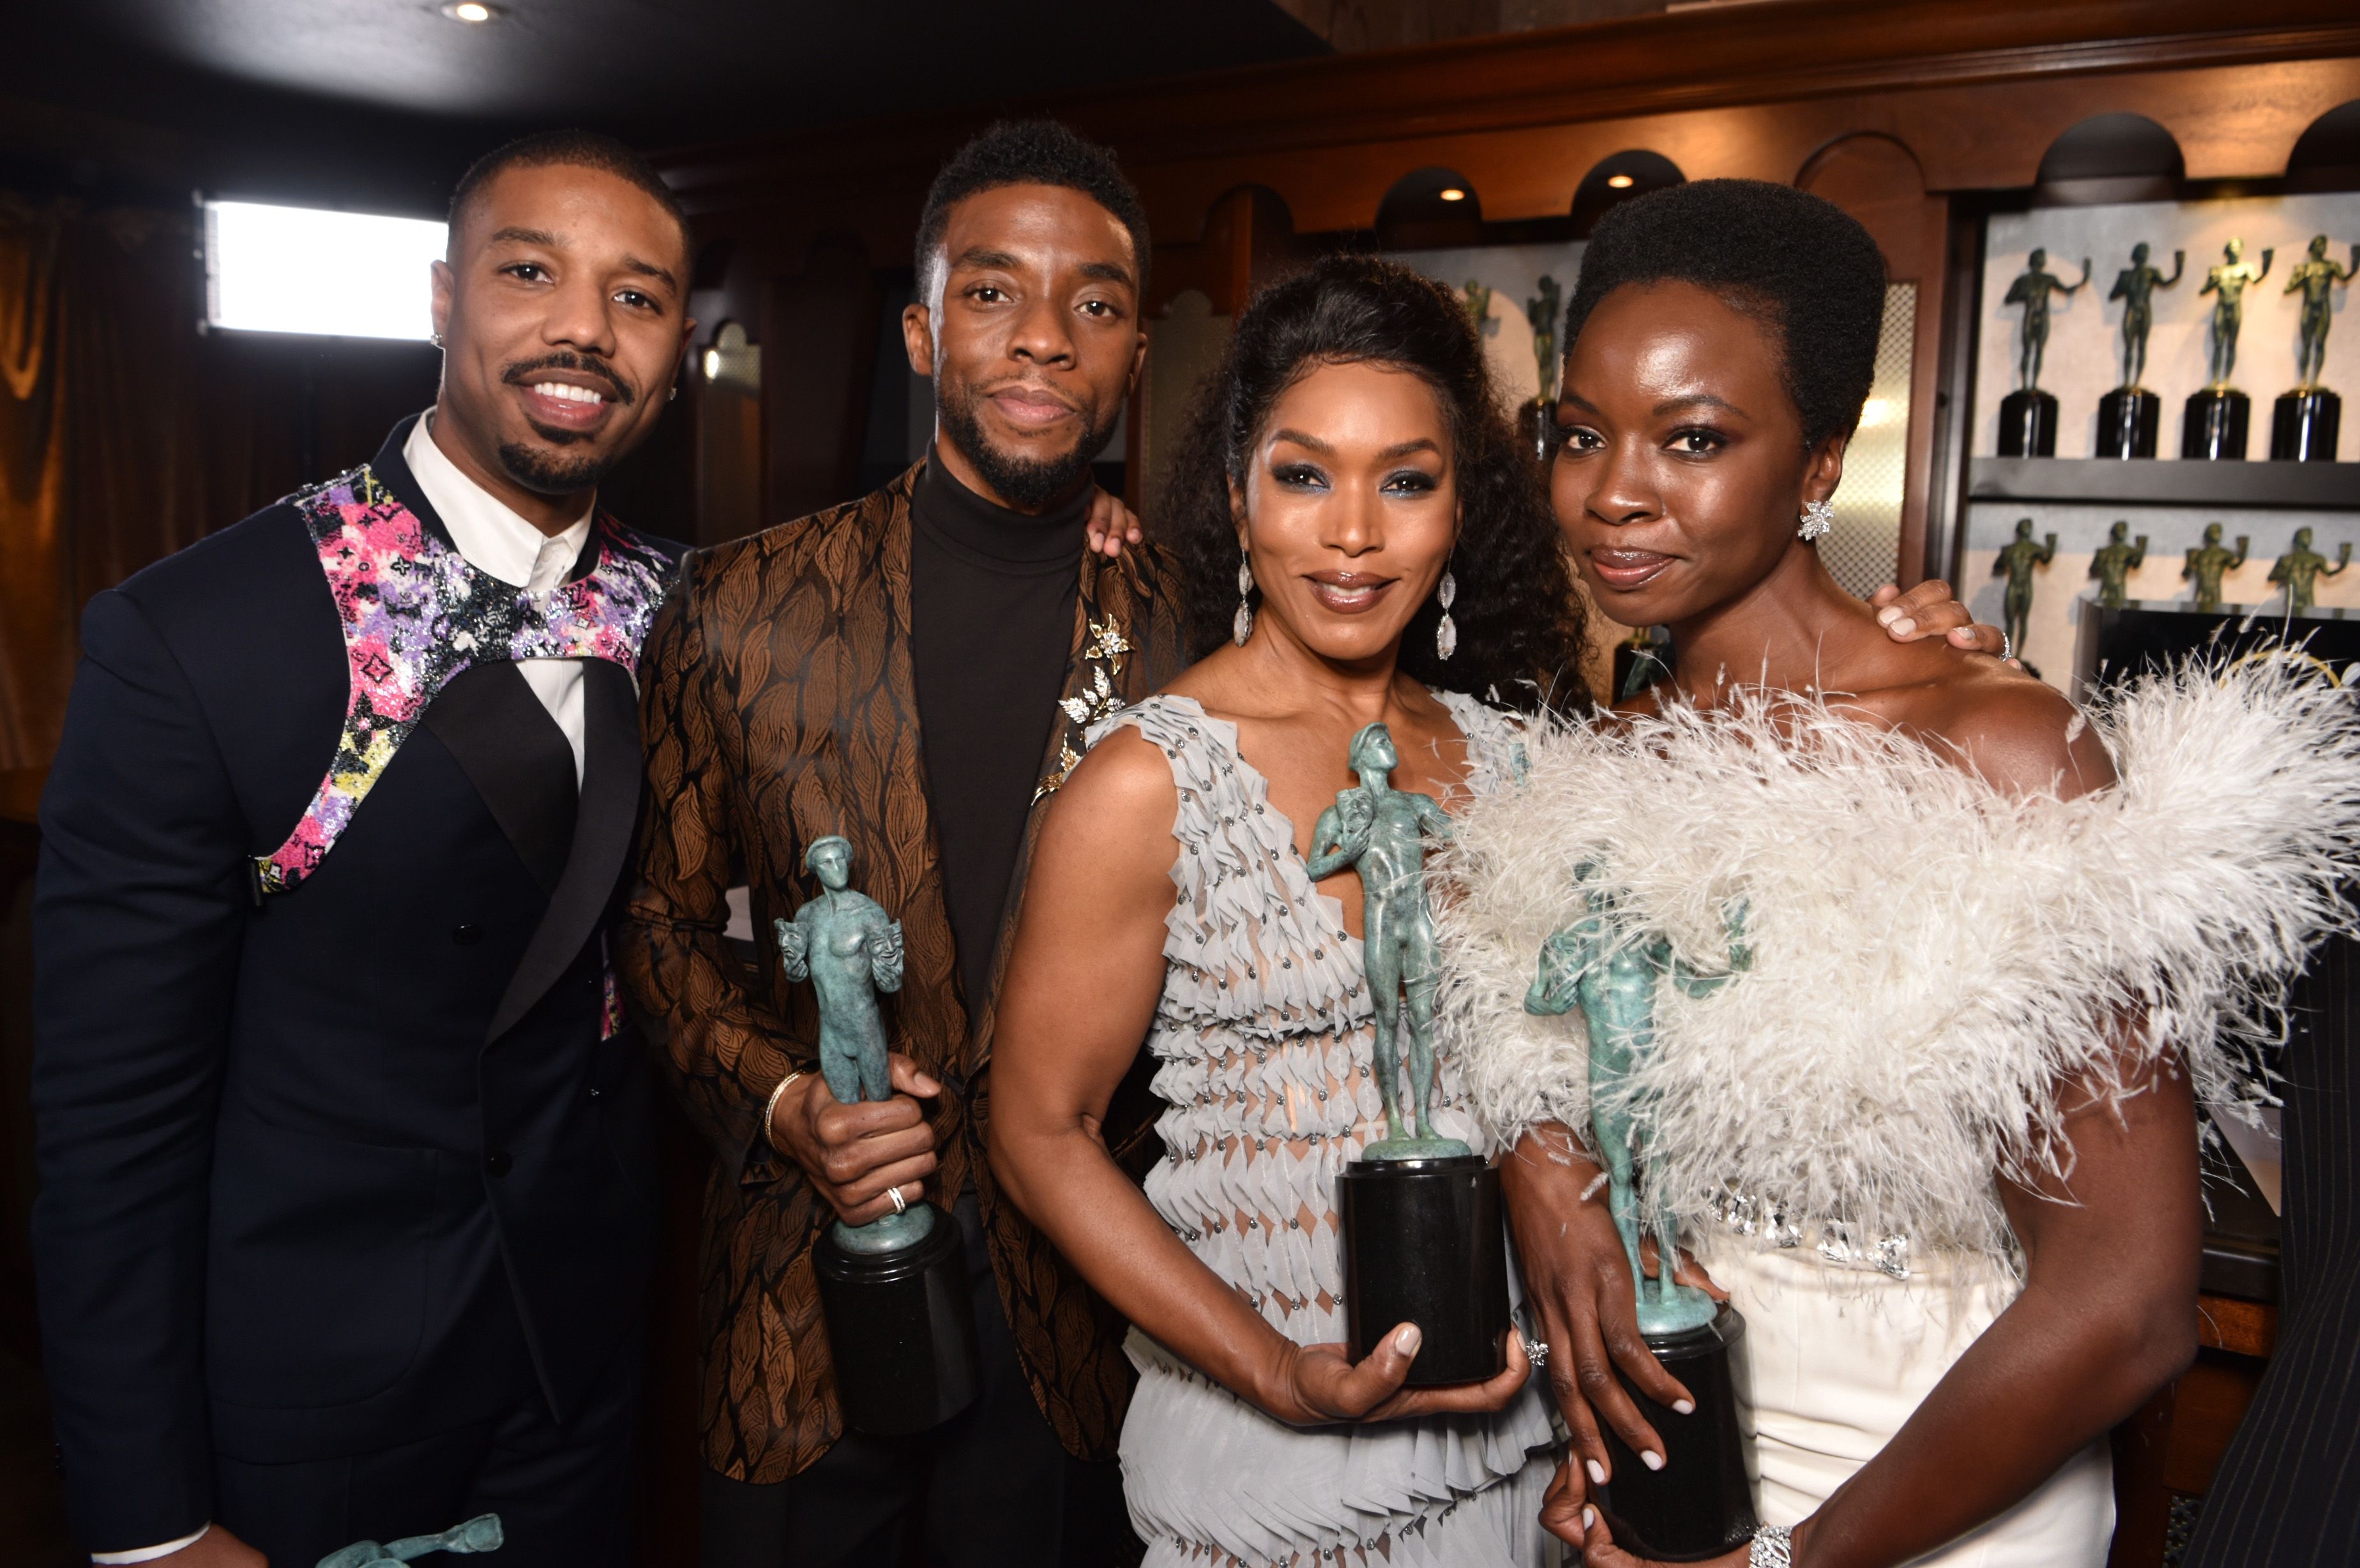 Chadwick Boseman Death: Michael B. Jordan Honors 'Black Panther' Star